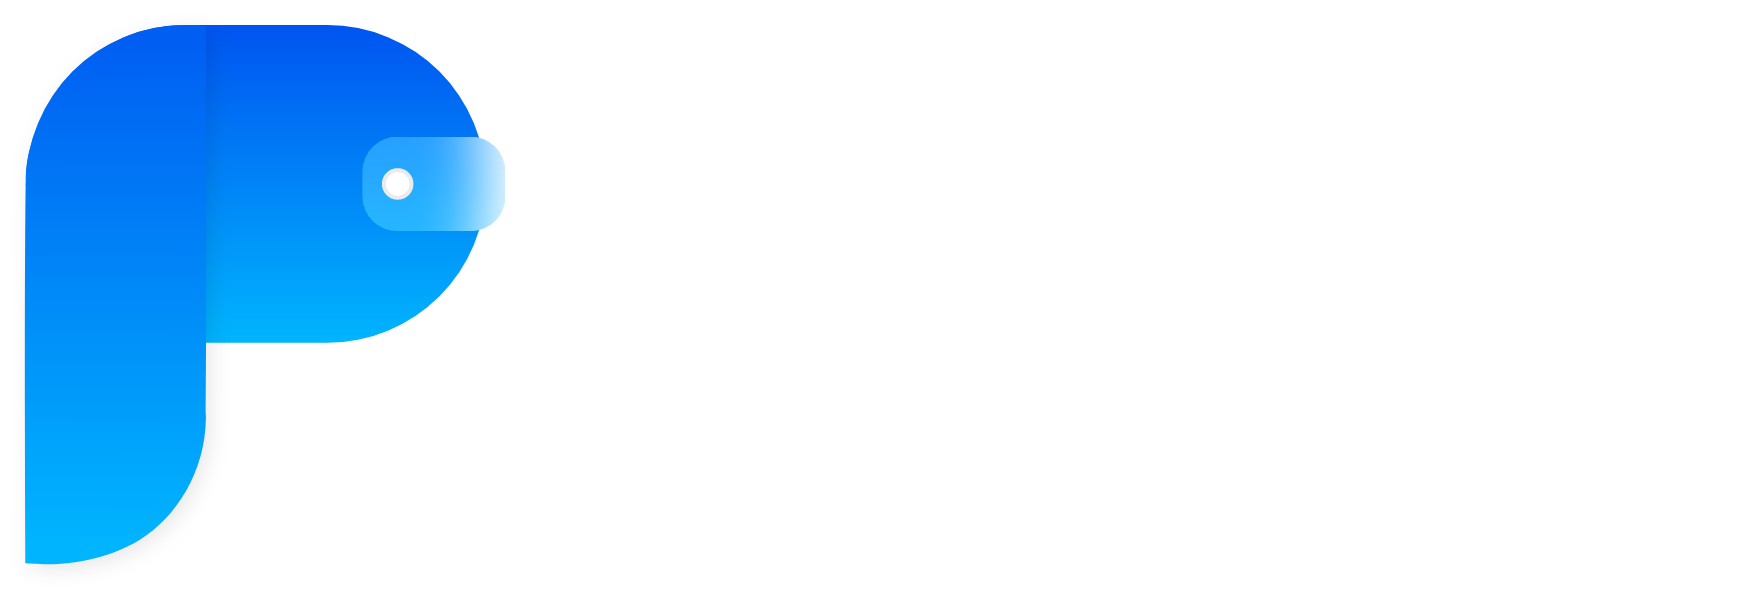 paysmaker logo 